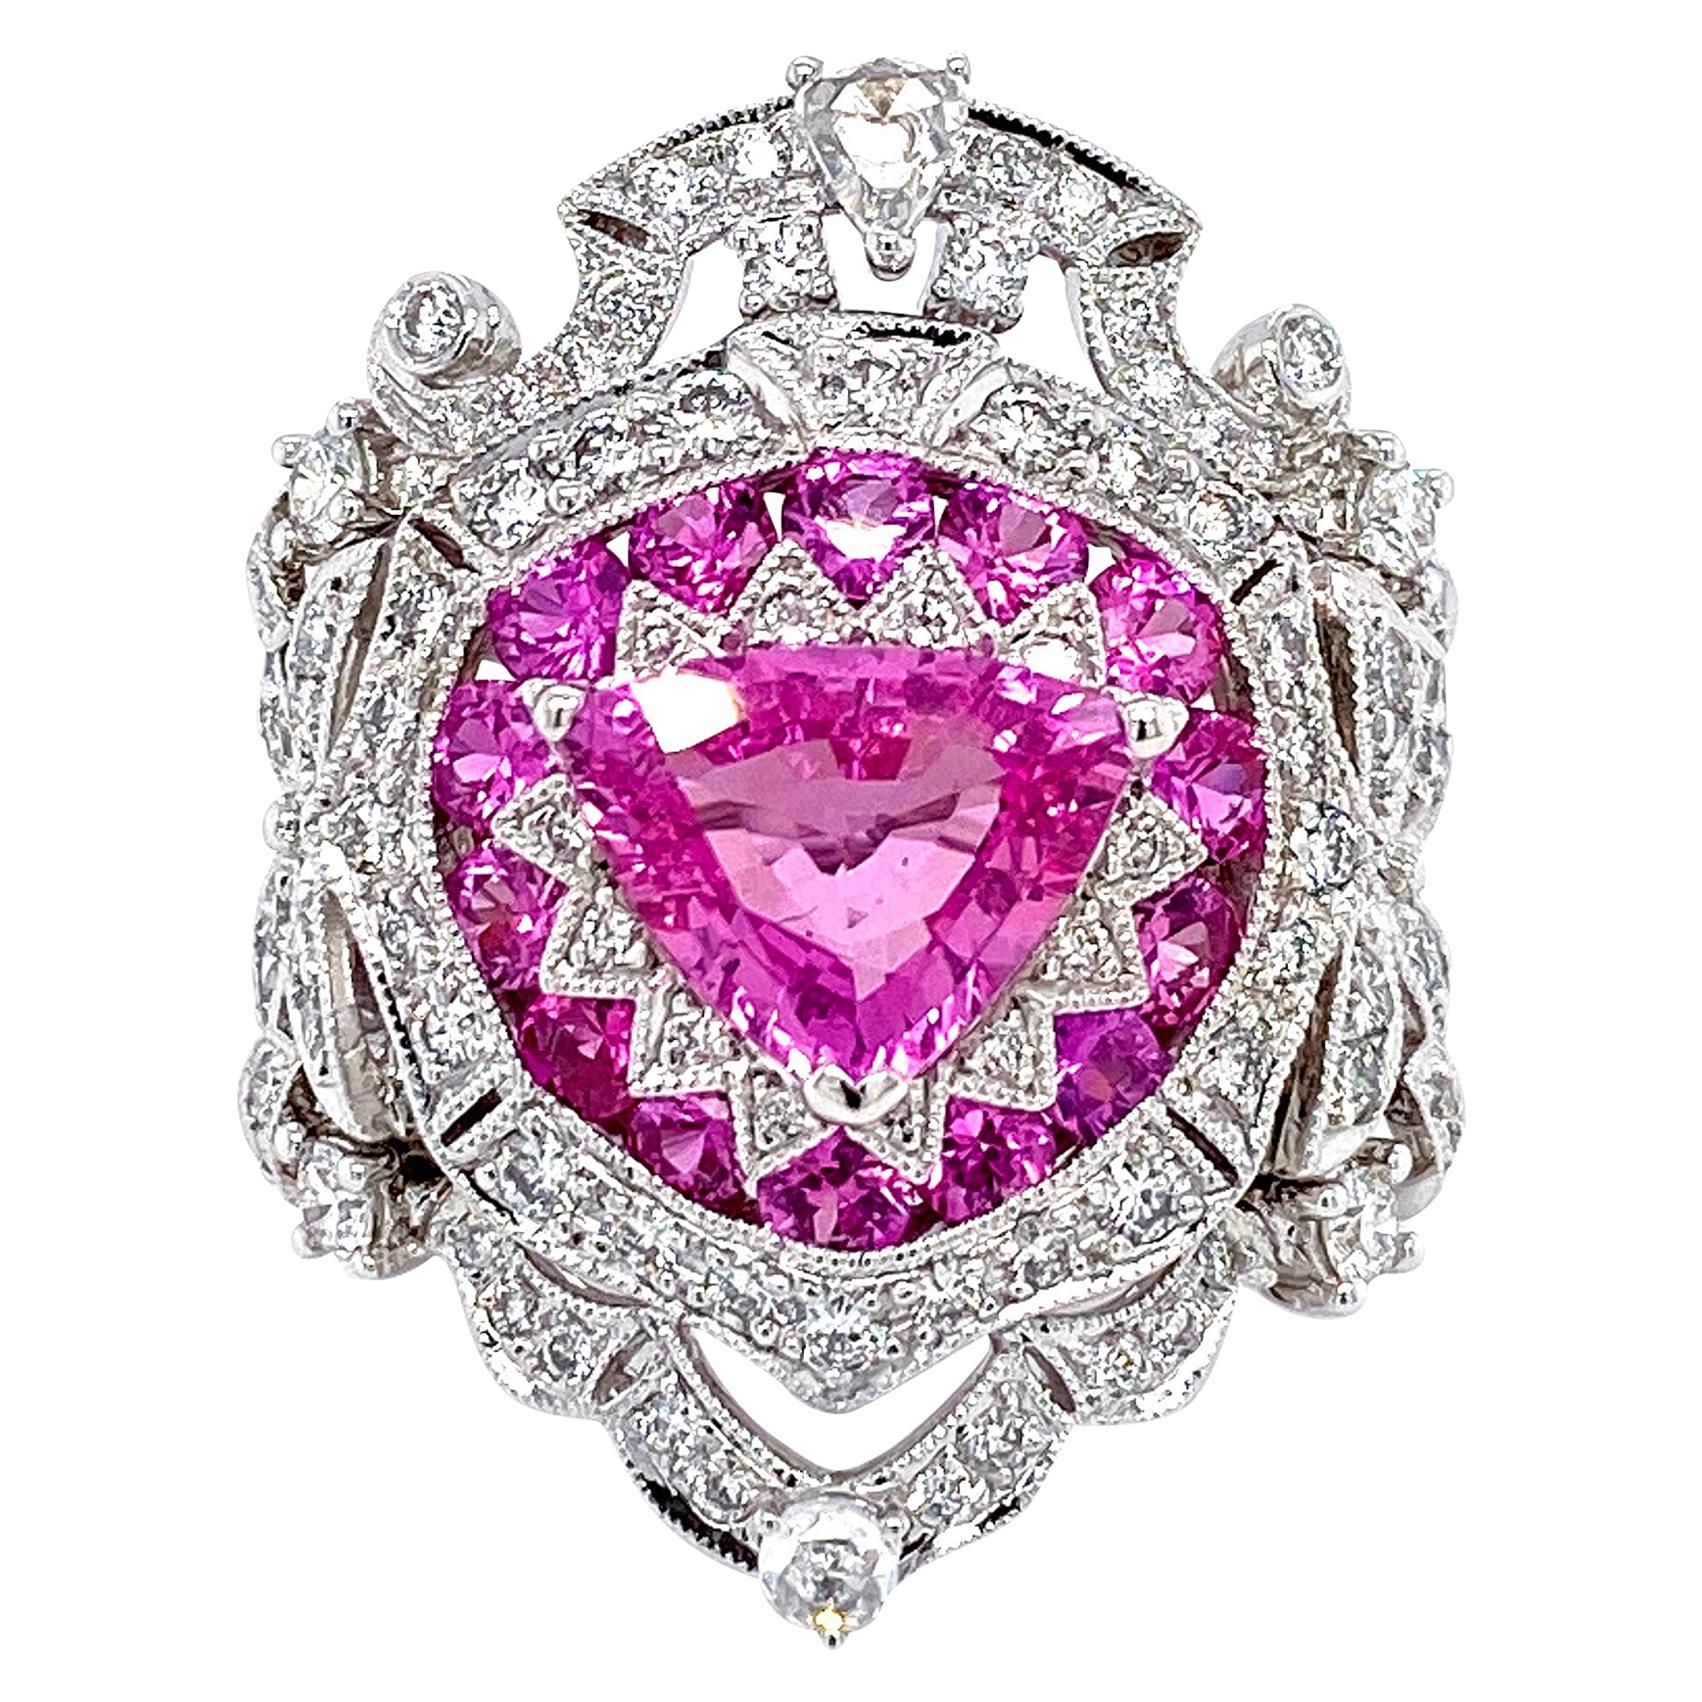 Art Deco Inspired Pink Sapphire and Diamond Ring in 18 Karat White Gold